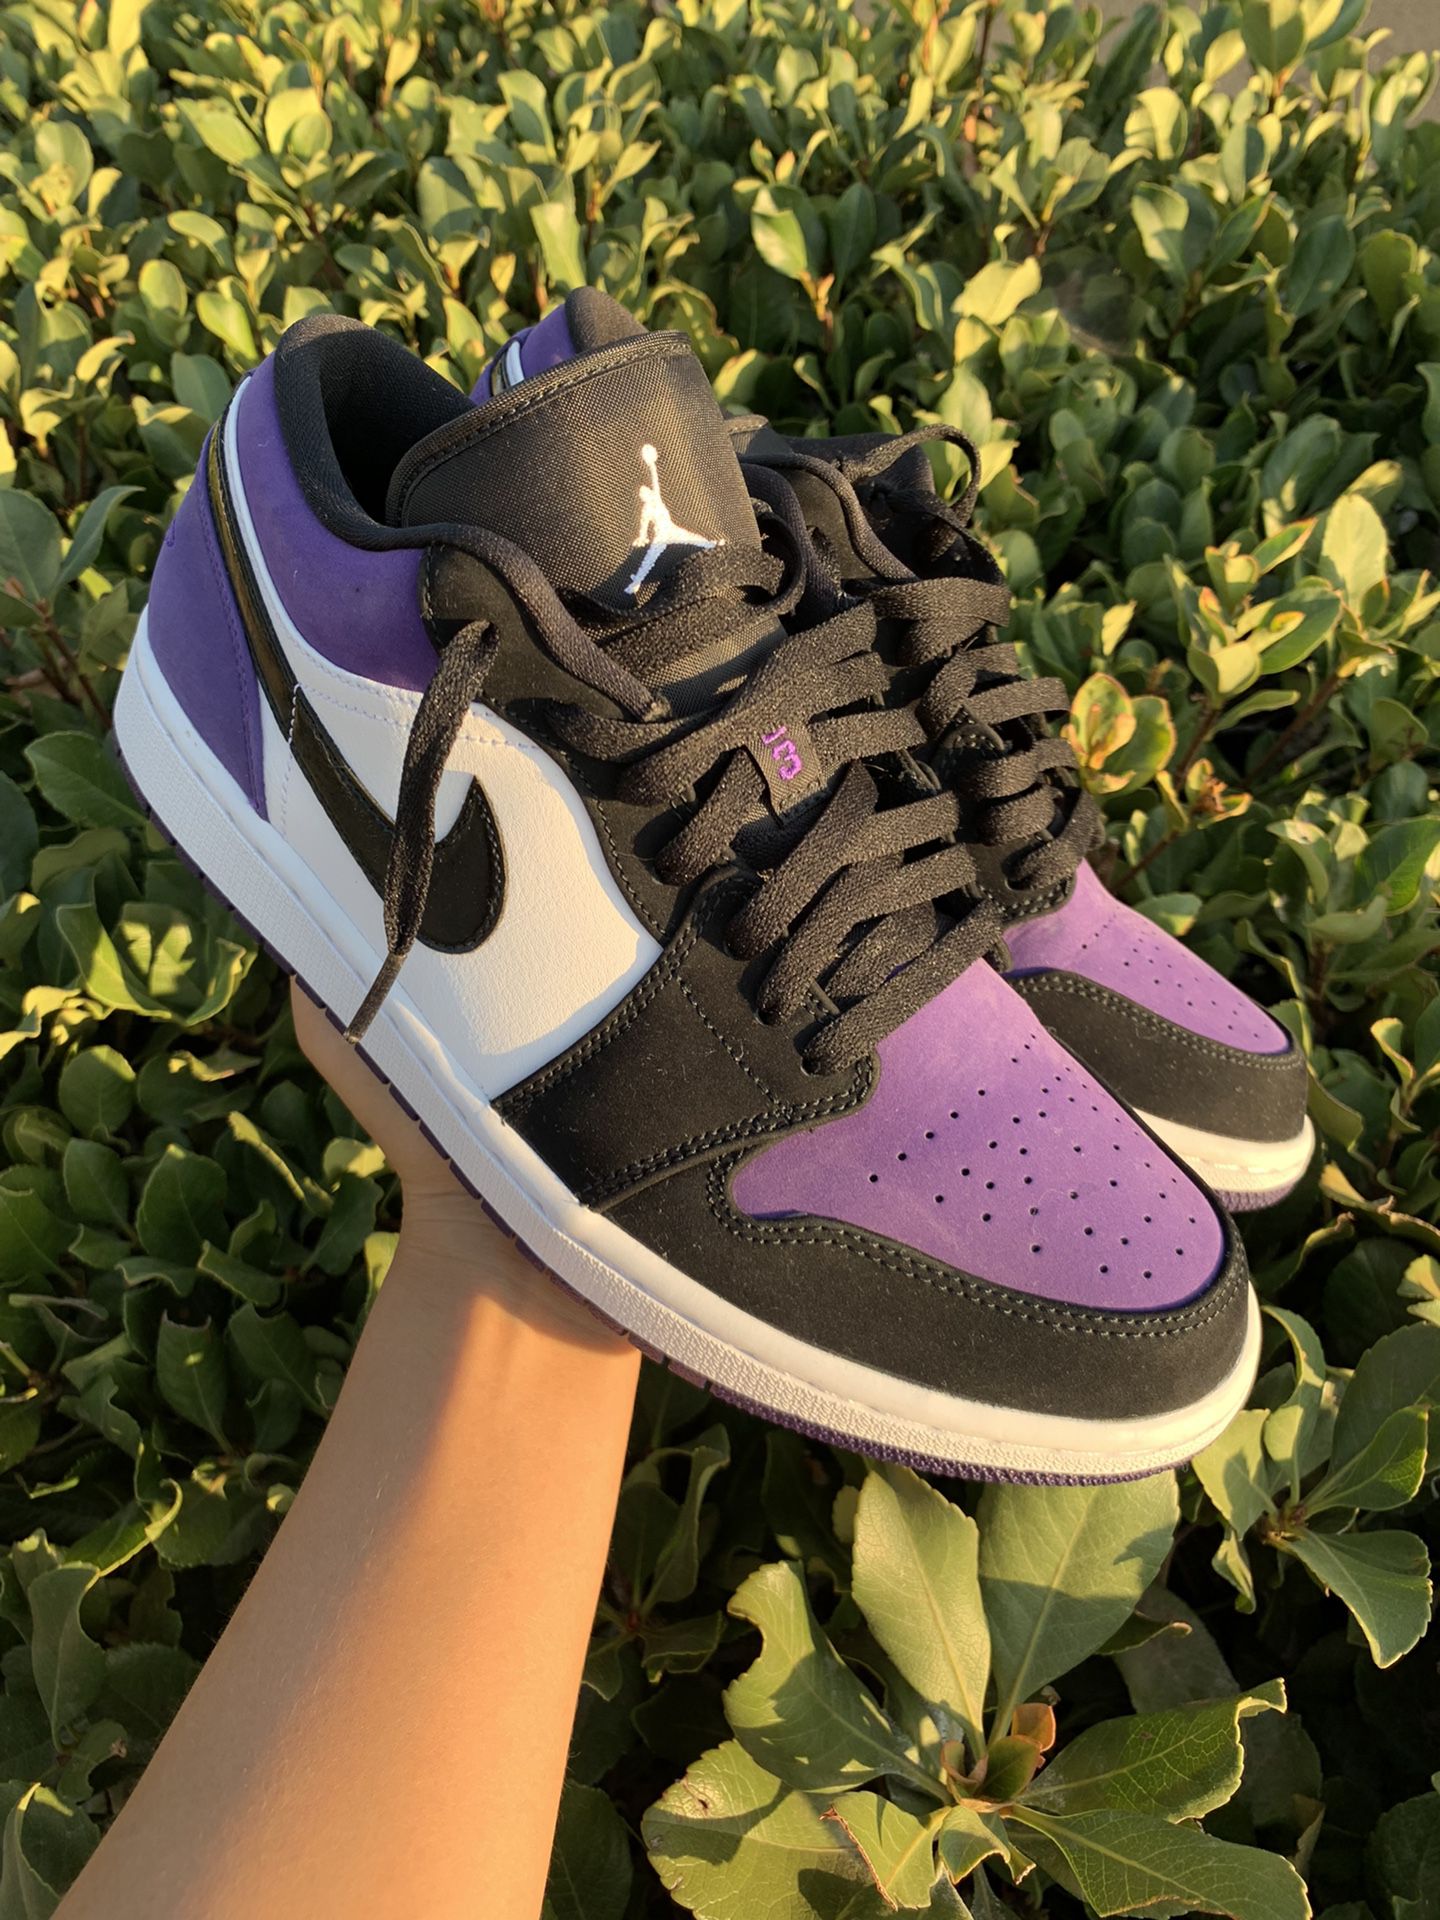 Jordan 1 Low Court Purple 